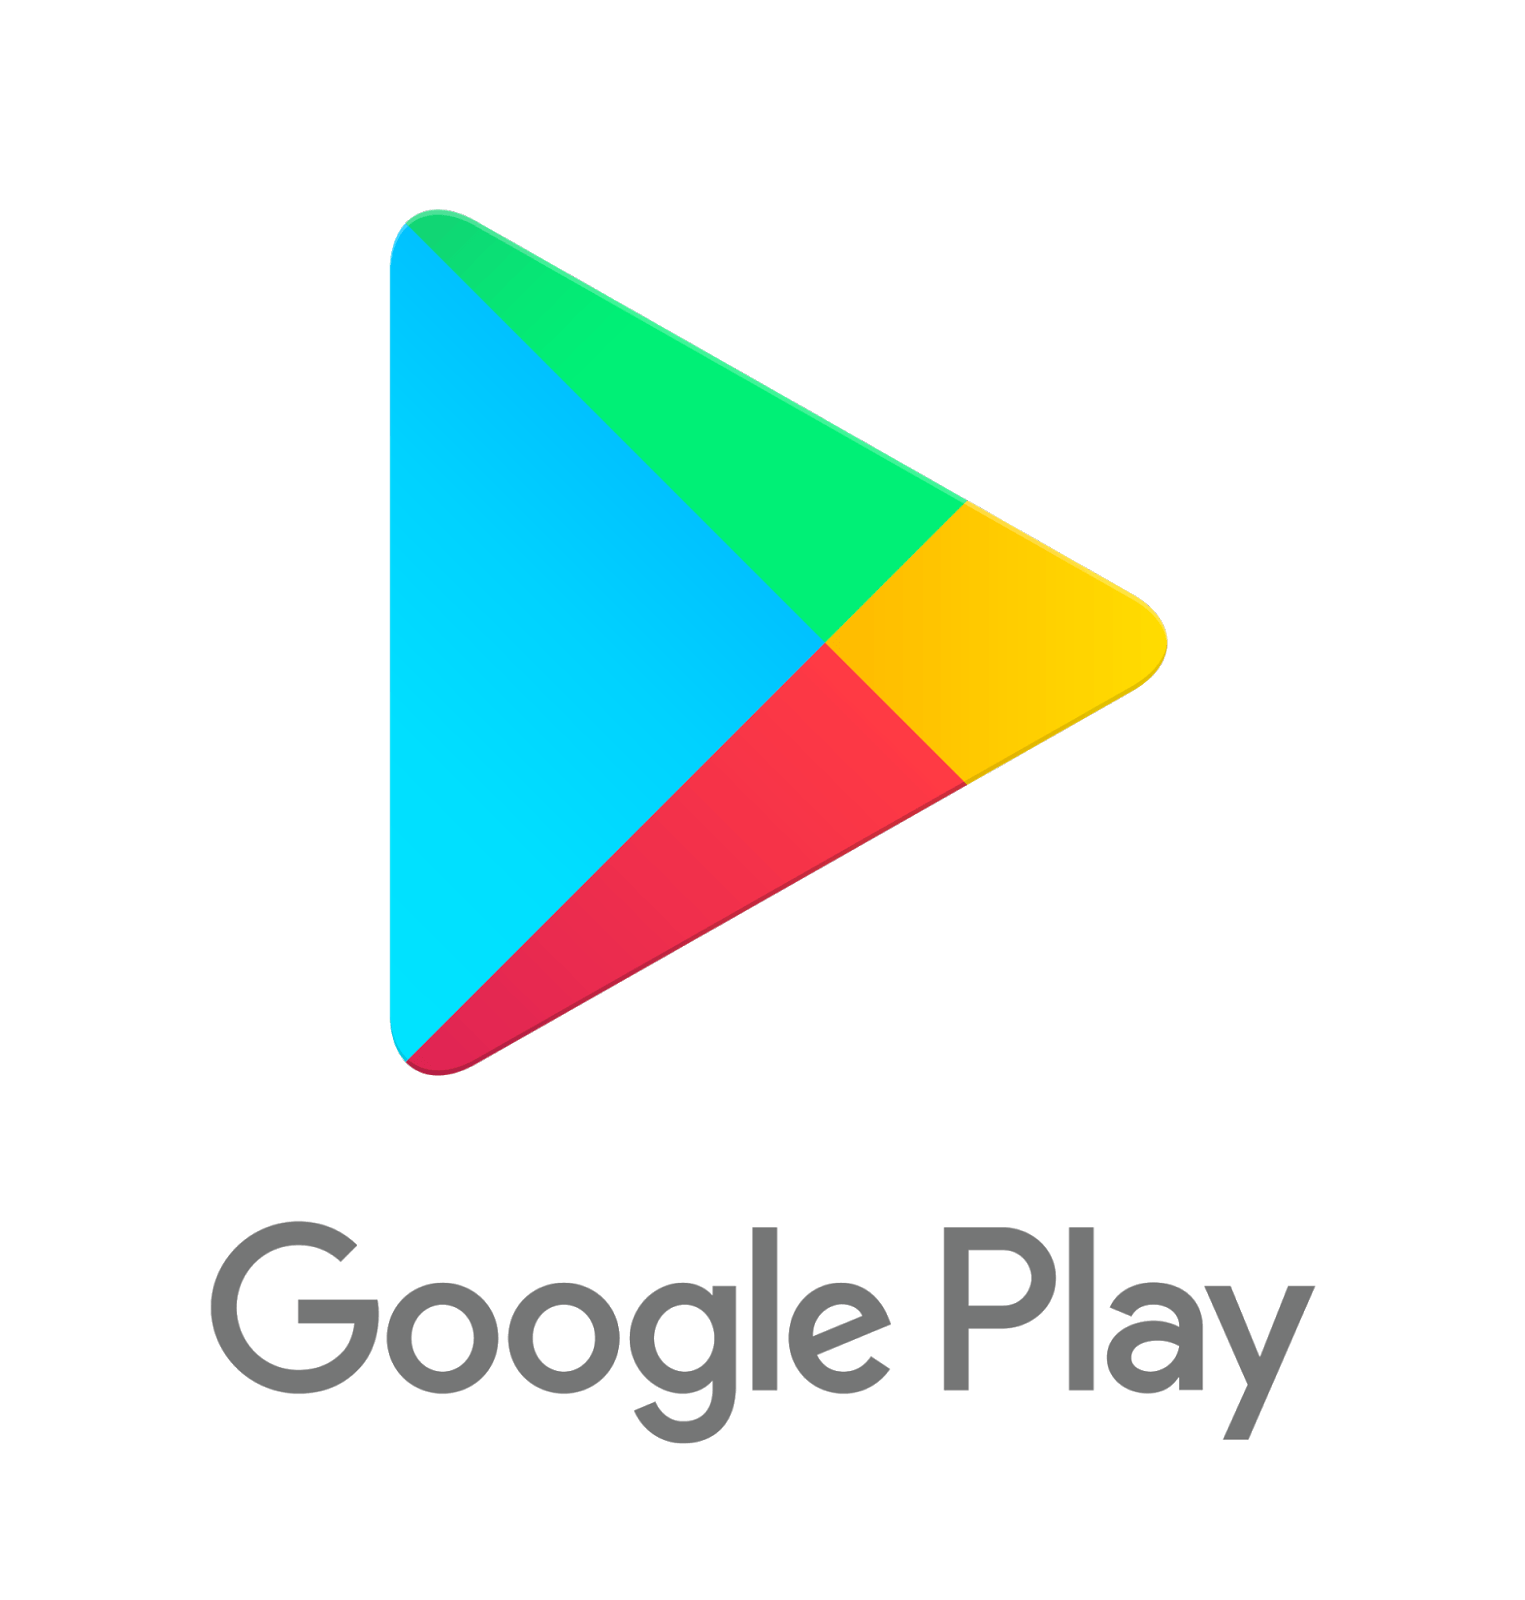 Get It On Google Play Logo - Google play logo png 5 PNG Image